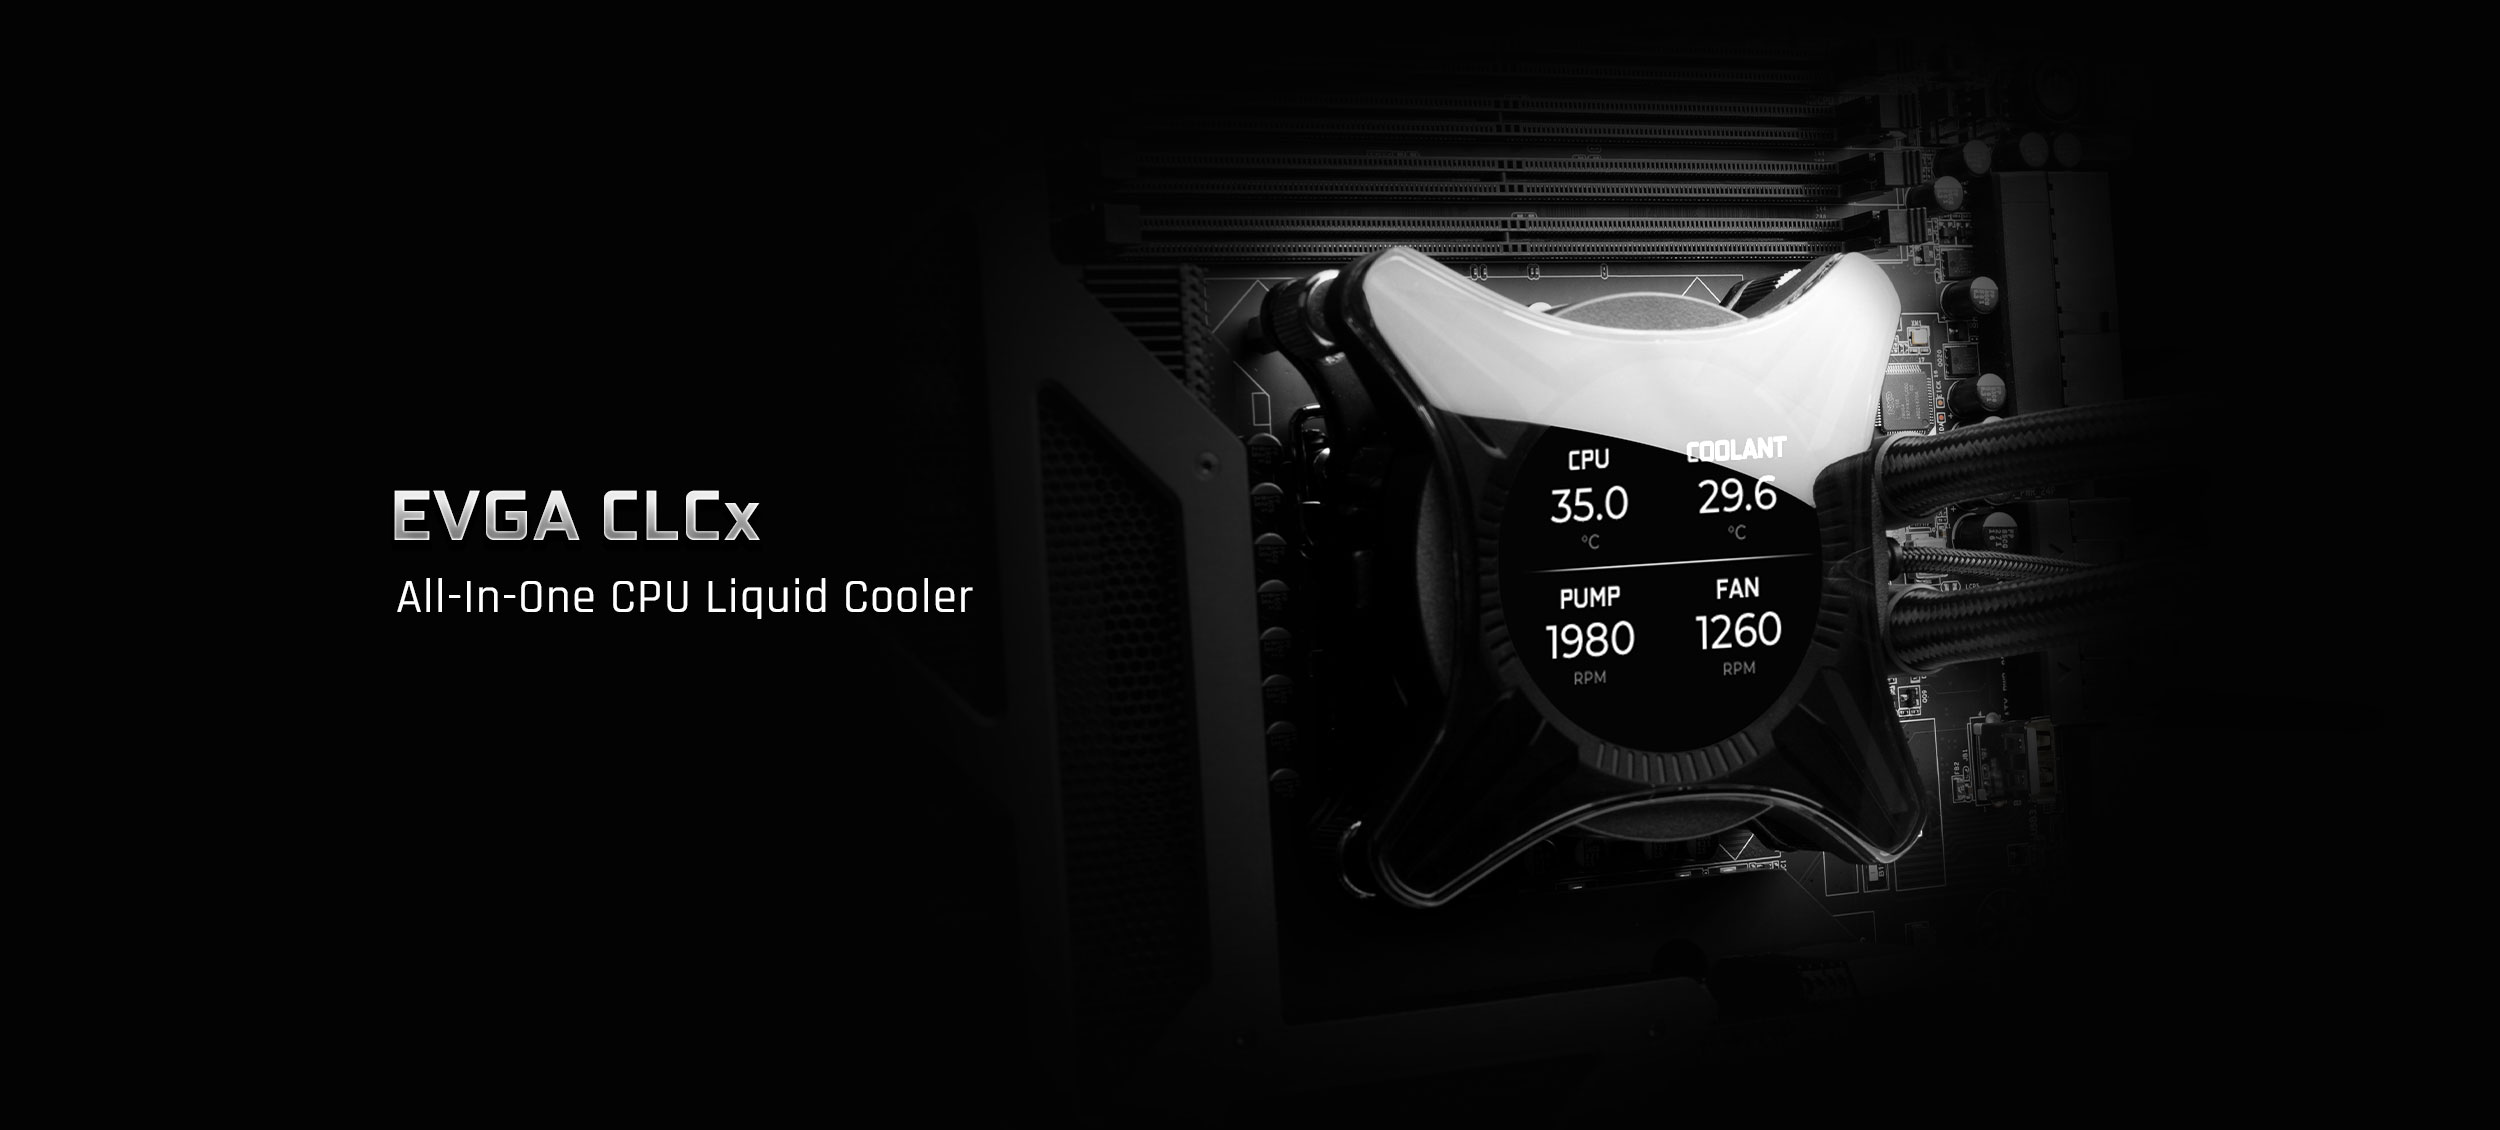 EVGA CLCx All-In-One CPU Liquid Cooler